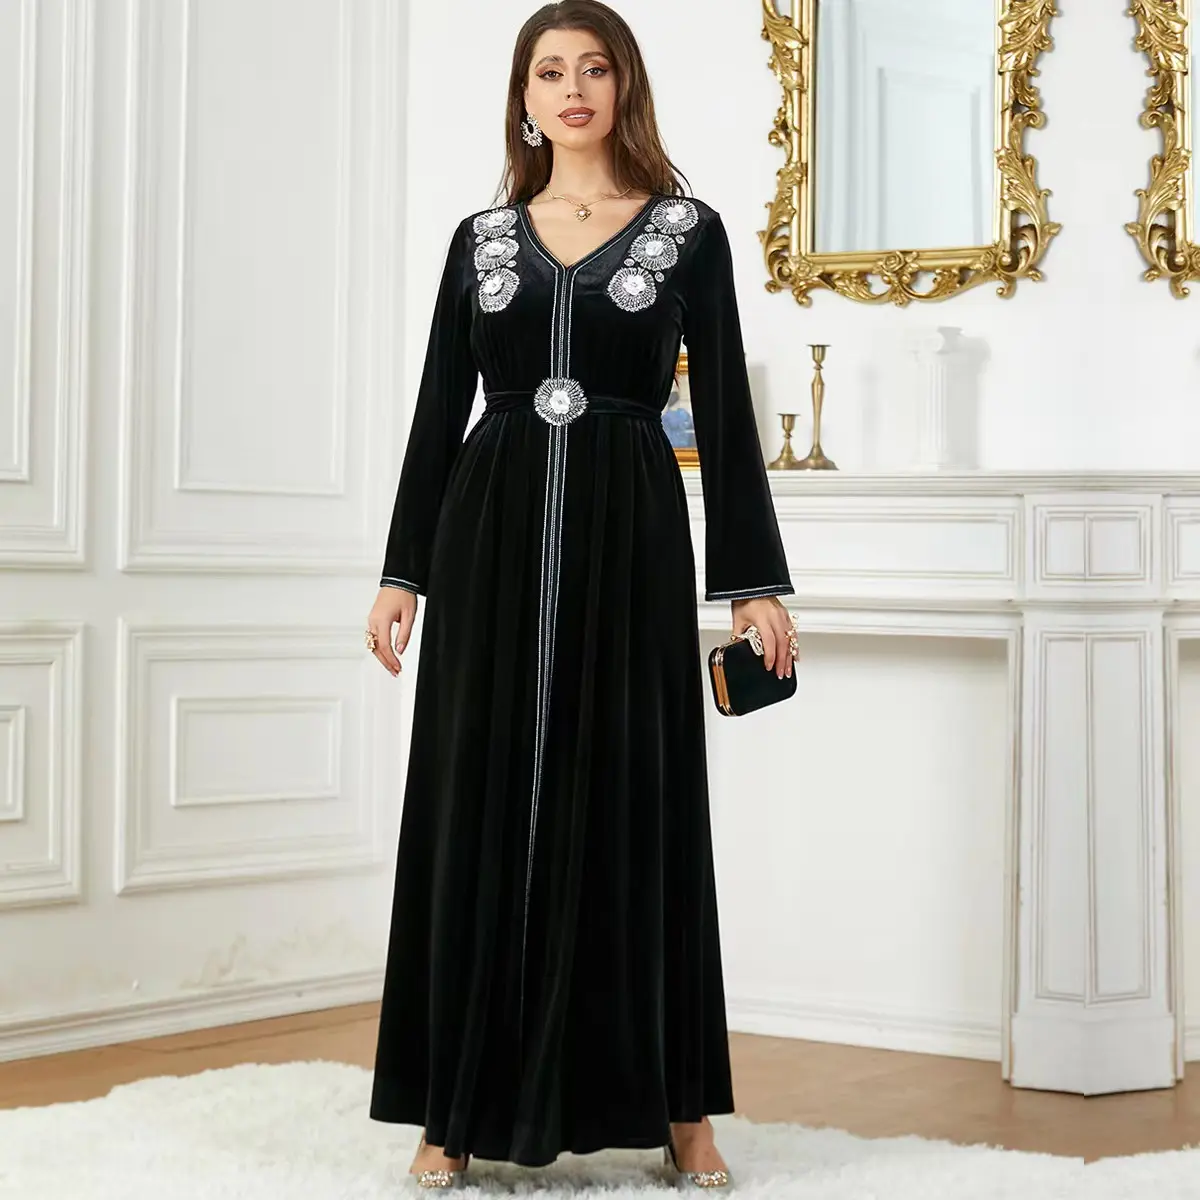 Gaun panjang Muslim musim gugur musim dingin baru Applique hitam beludru leher V wanita Abaya Dubai Turki Timur Tengah